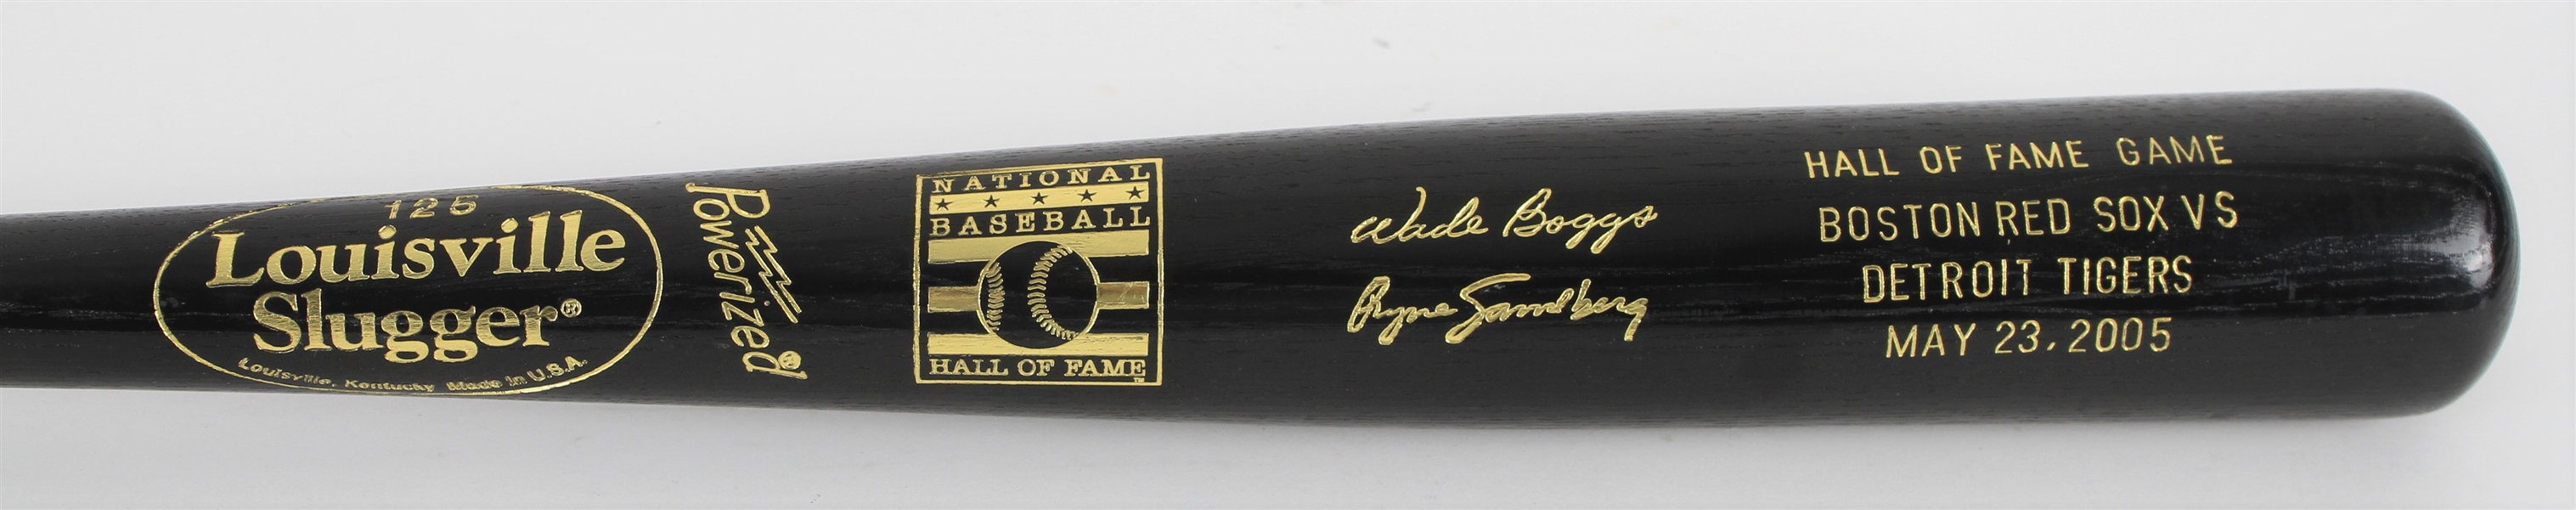 2005 Wade Boggs Ryne Sandberg Hall of Fame Game Louisville Slugger Commemorative Bat